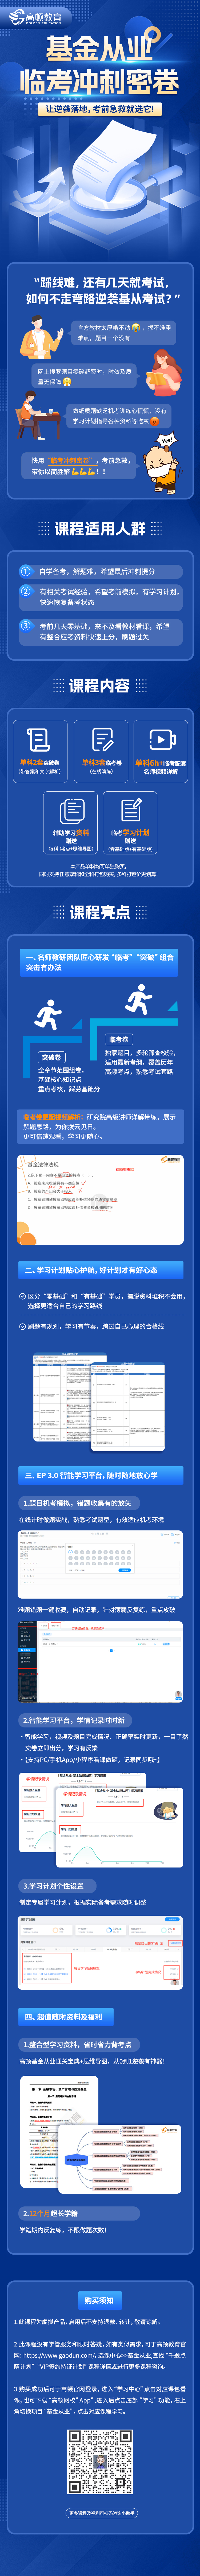 https://simg01.gaodunwangxiao.com/uploadfiles/product-center/202310/30/b7e9e_20231030175122.jpg